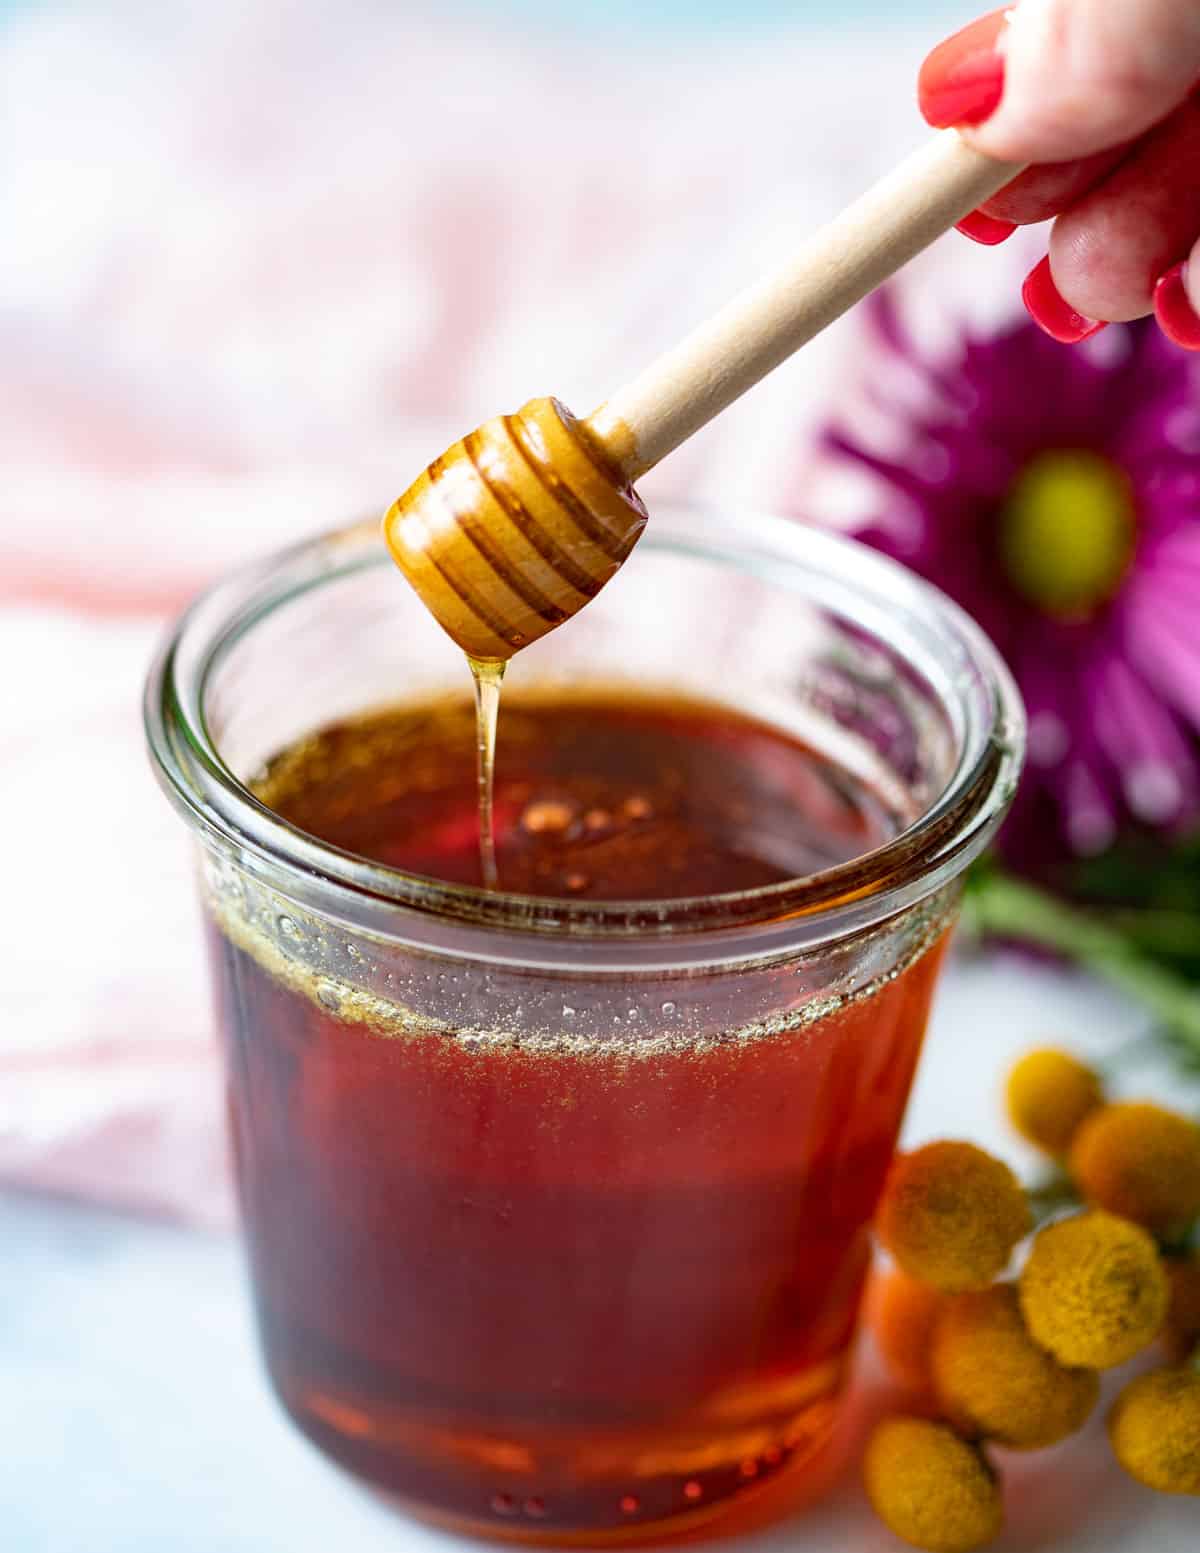 Honey wand dipped in a jar of vegan honey.
